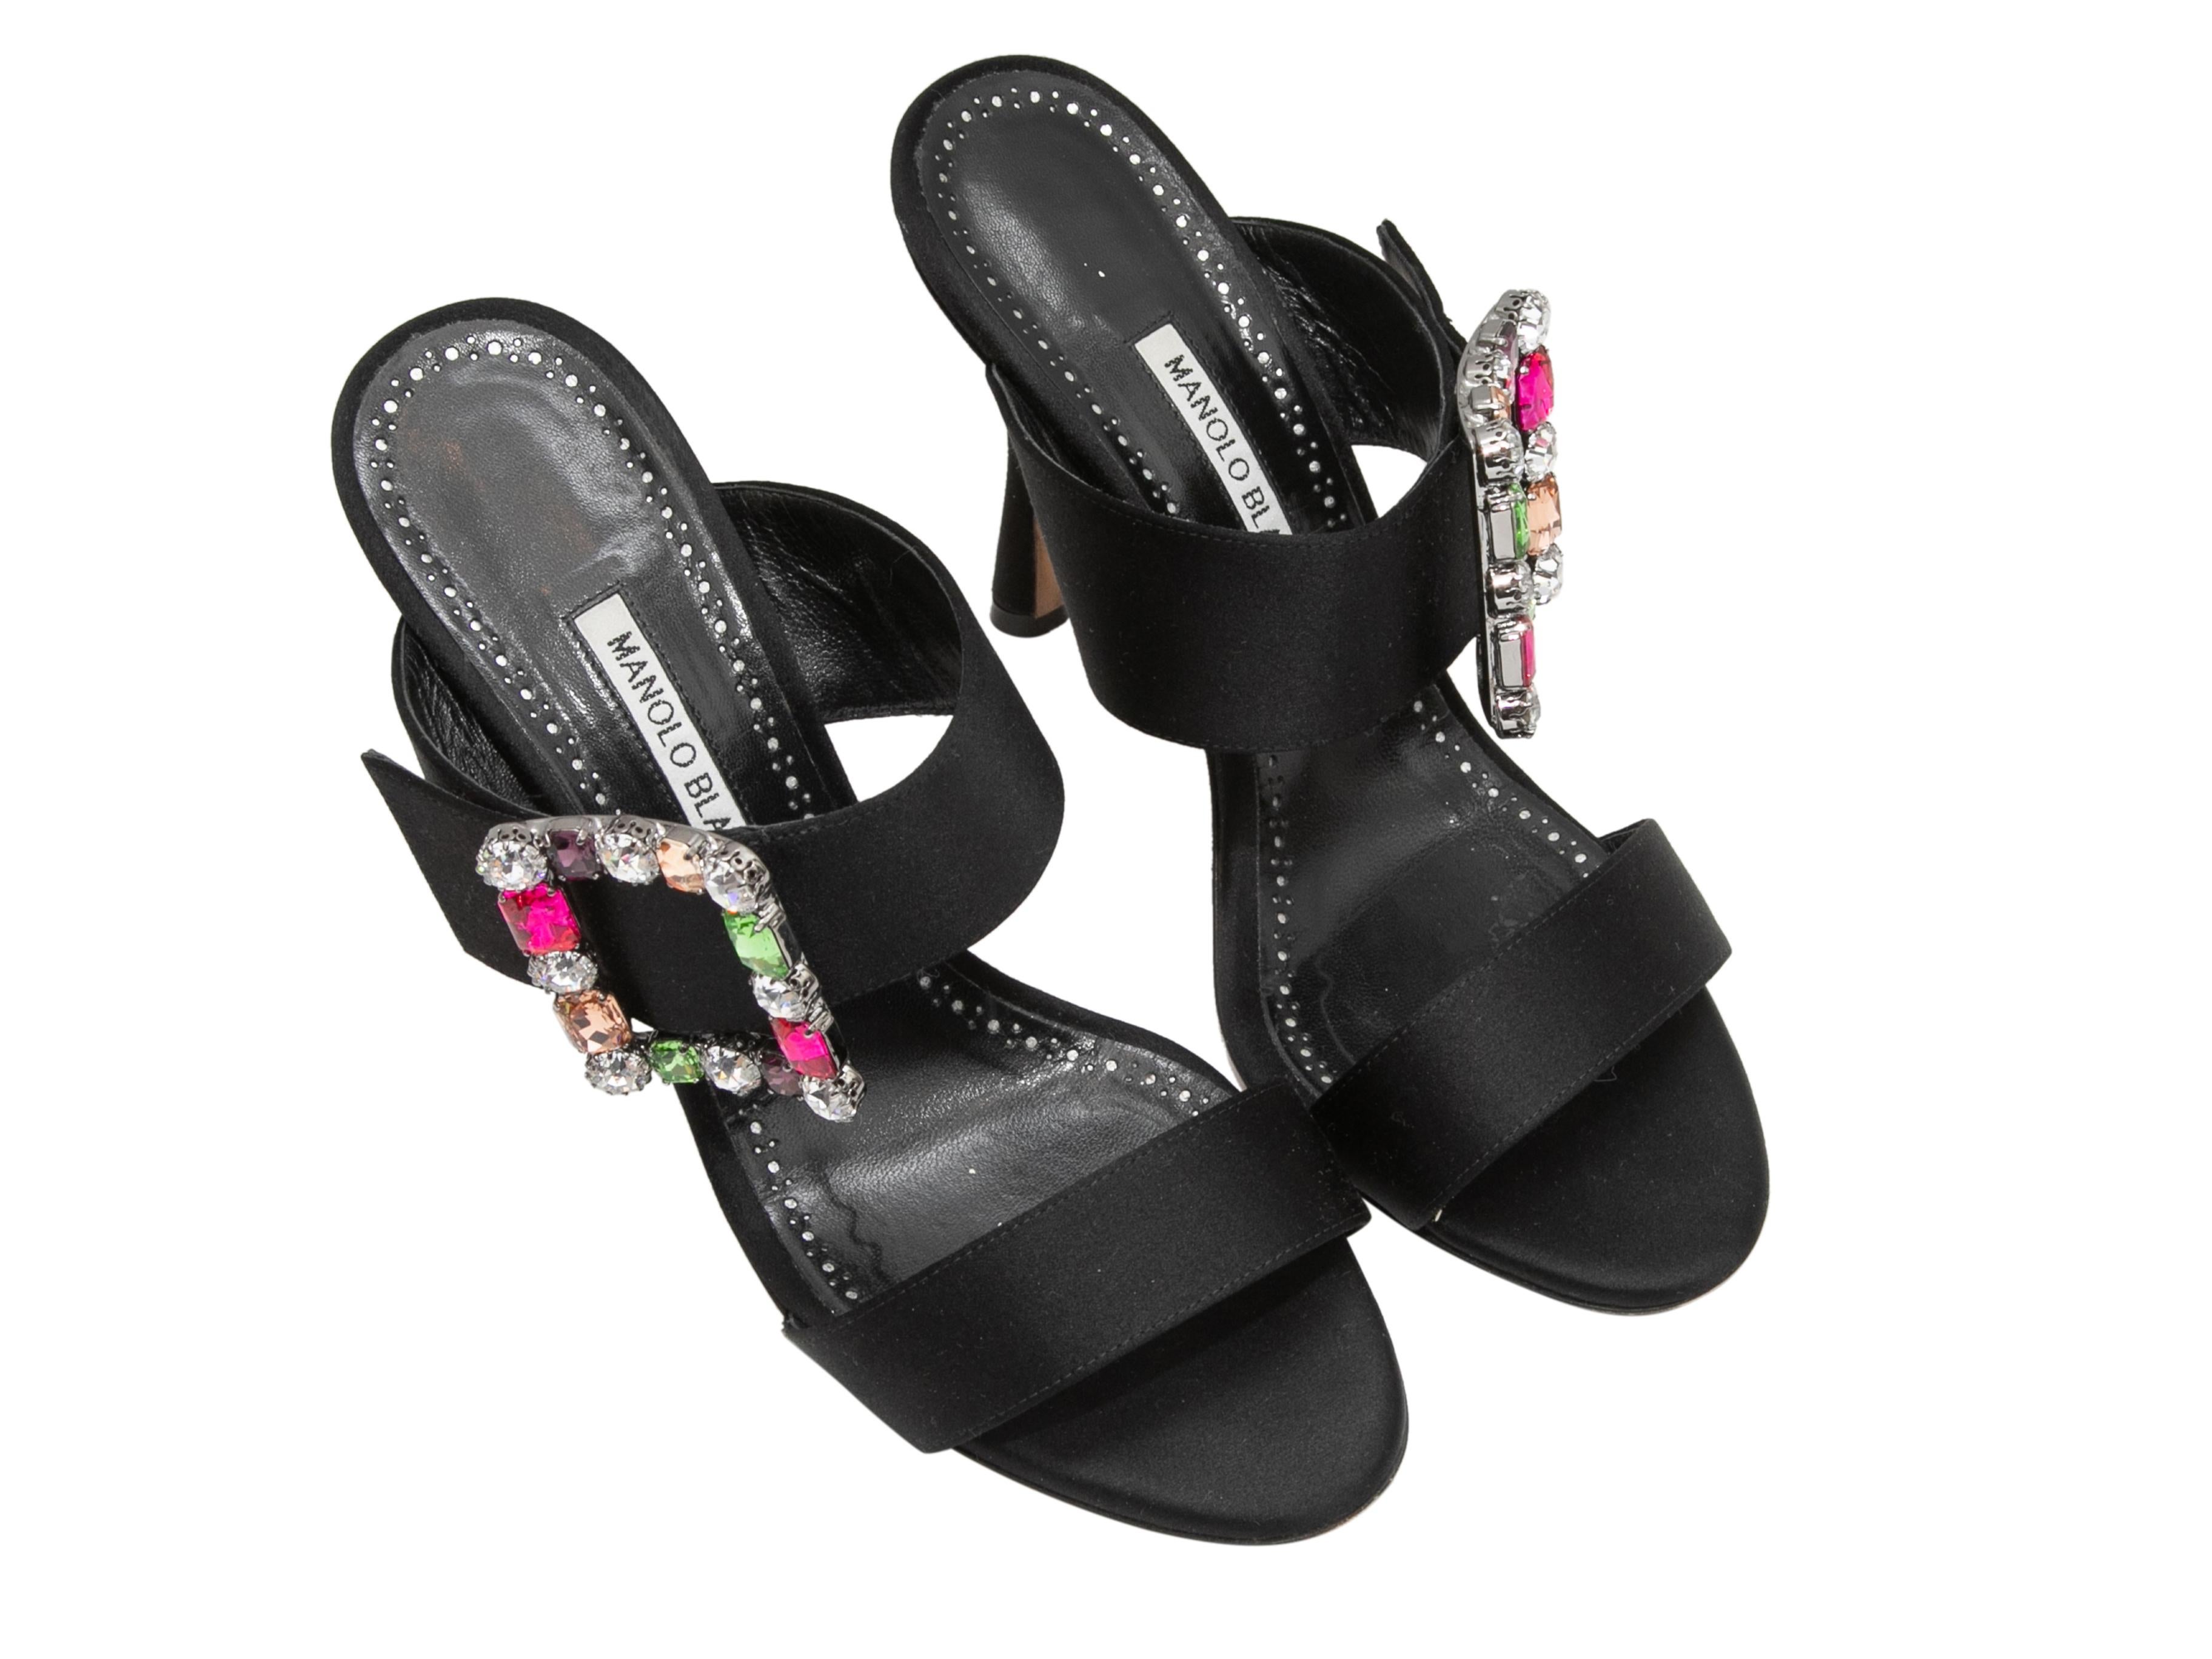 Black satin heeled sandals by Manolo Blahnik. Gemstone-embellished buckle adornments at tops. 4.25